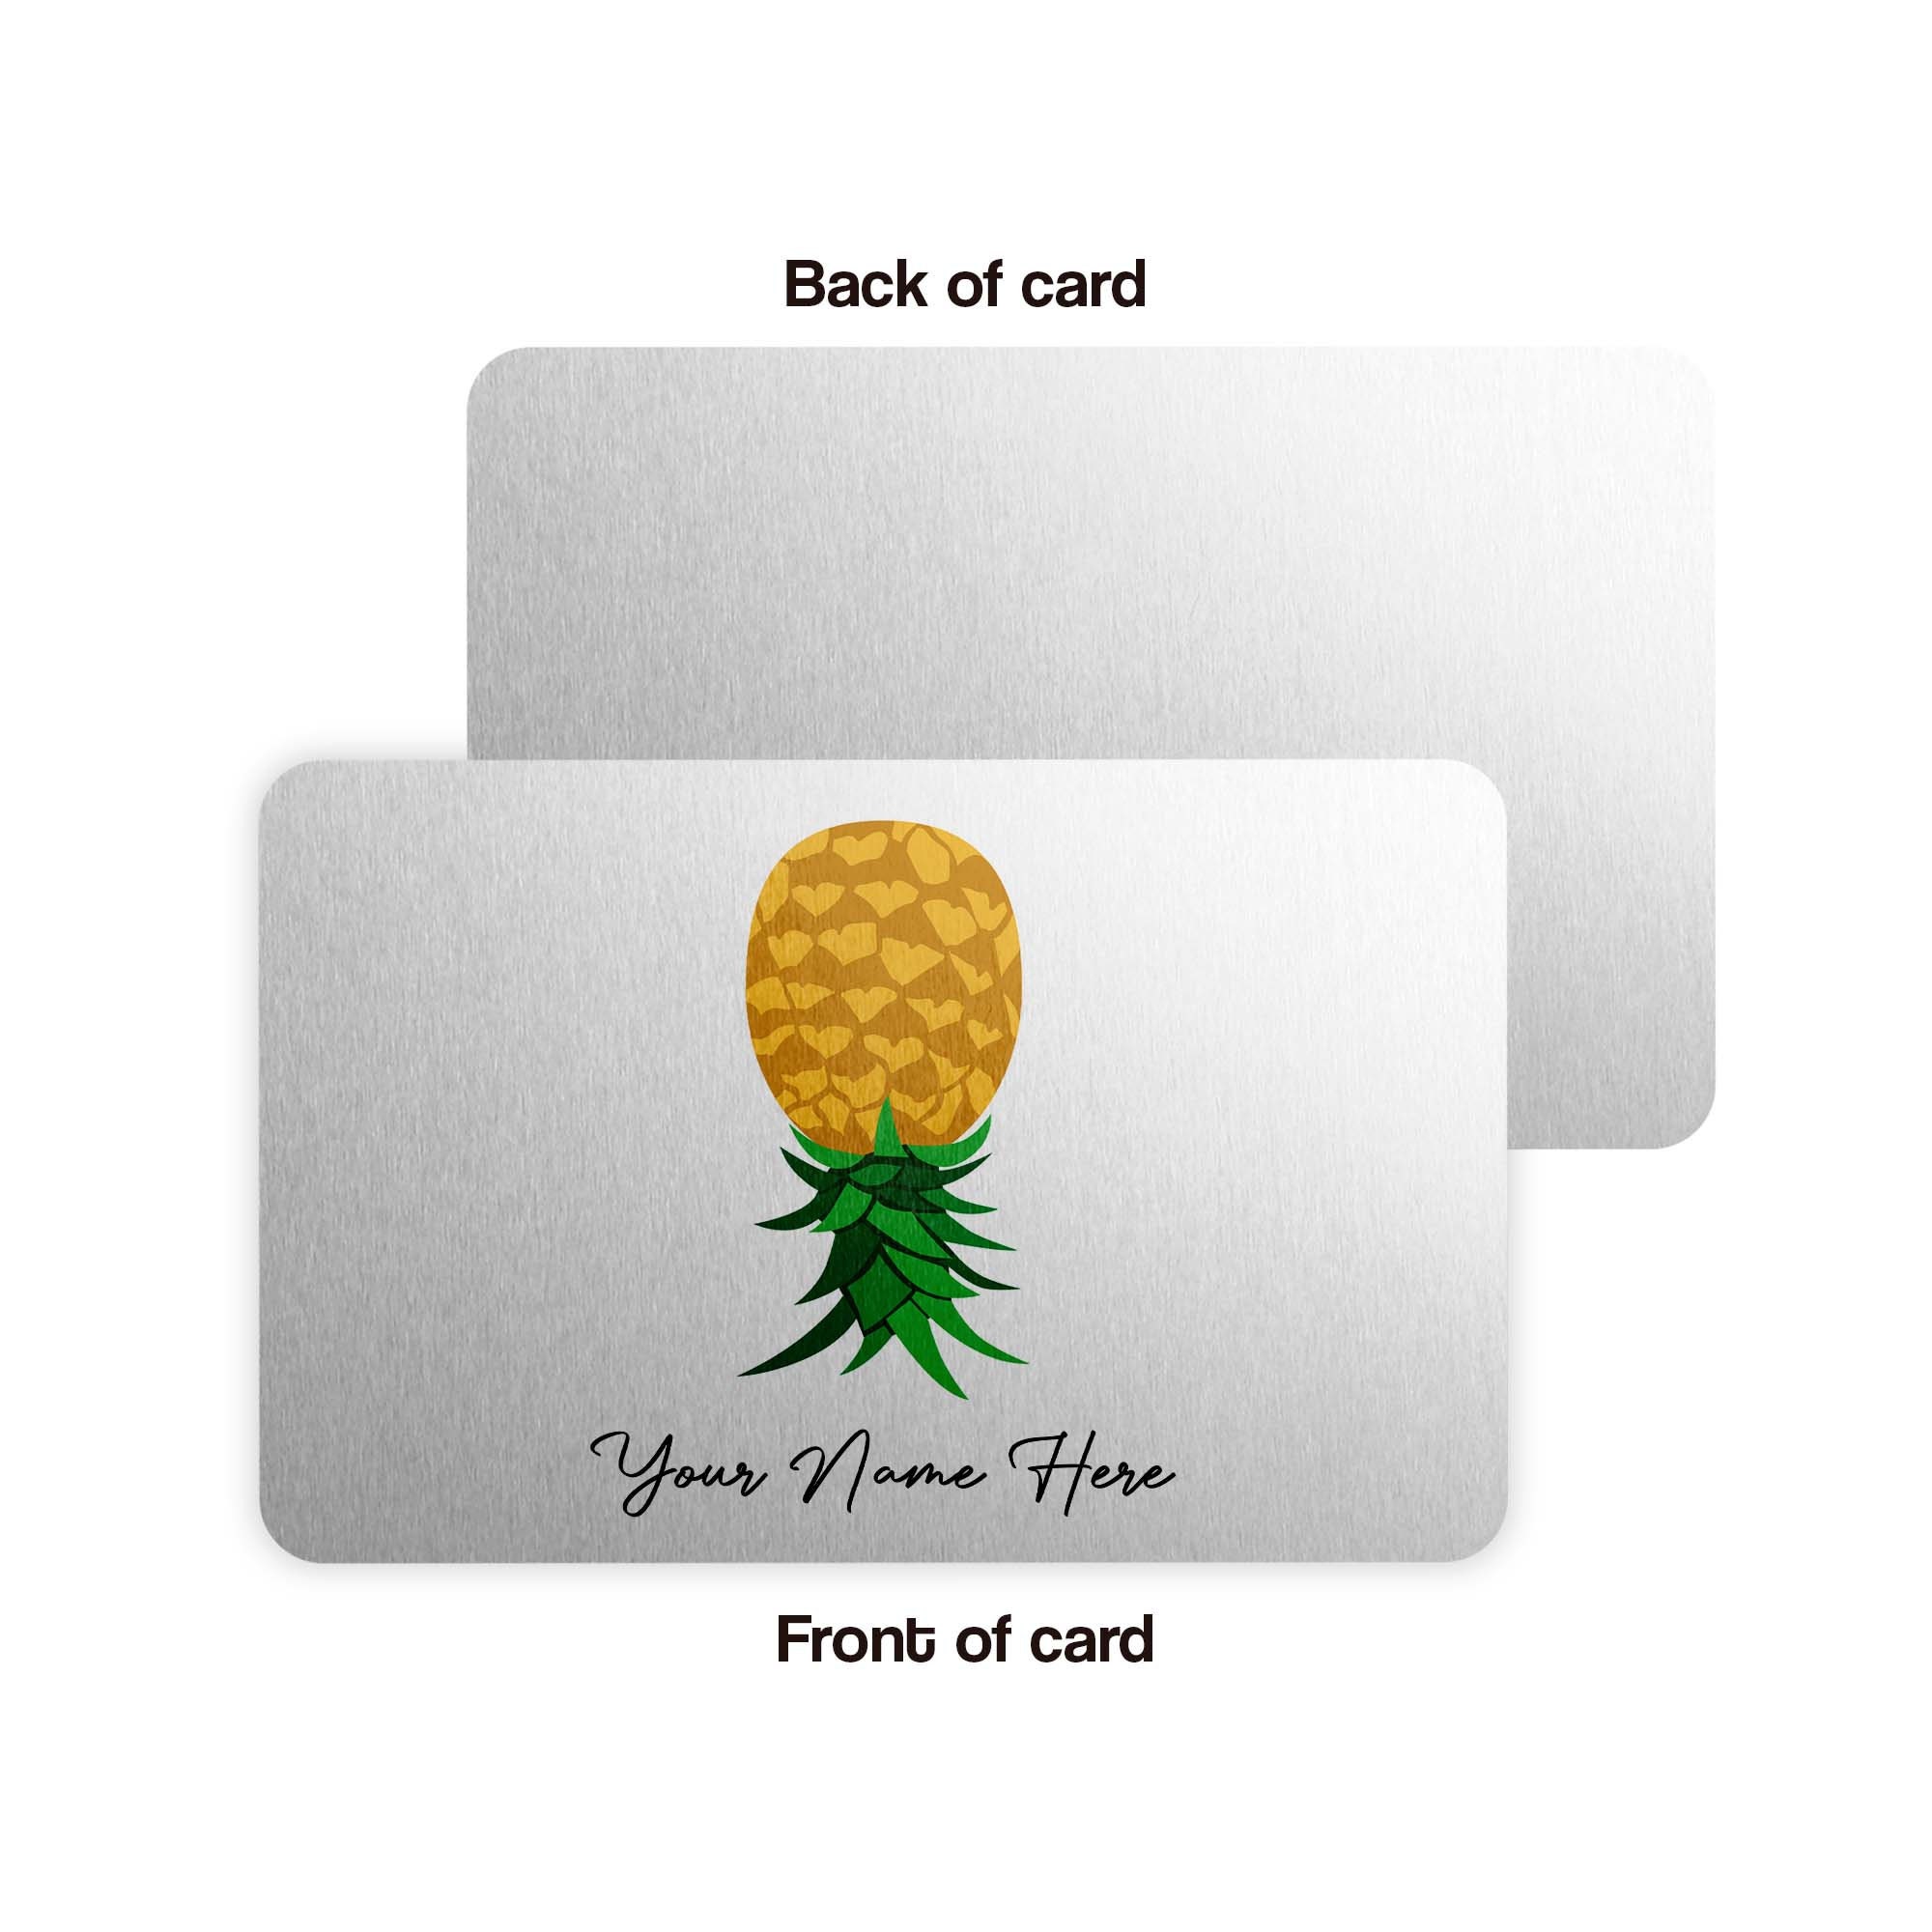 The Swinger Card Swinger Lifestyle Metal Wallet Card Gift image image